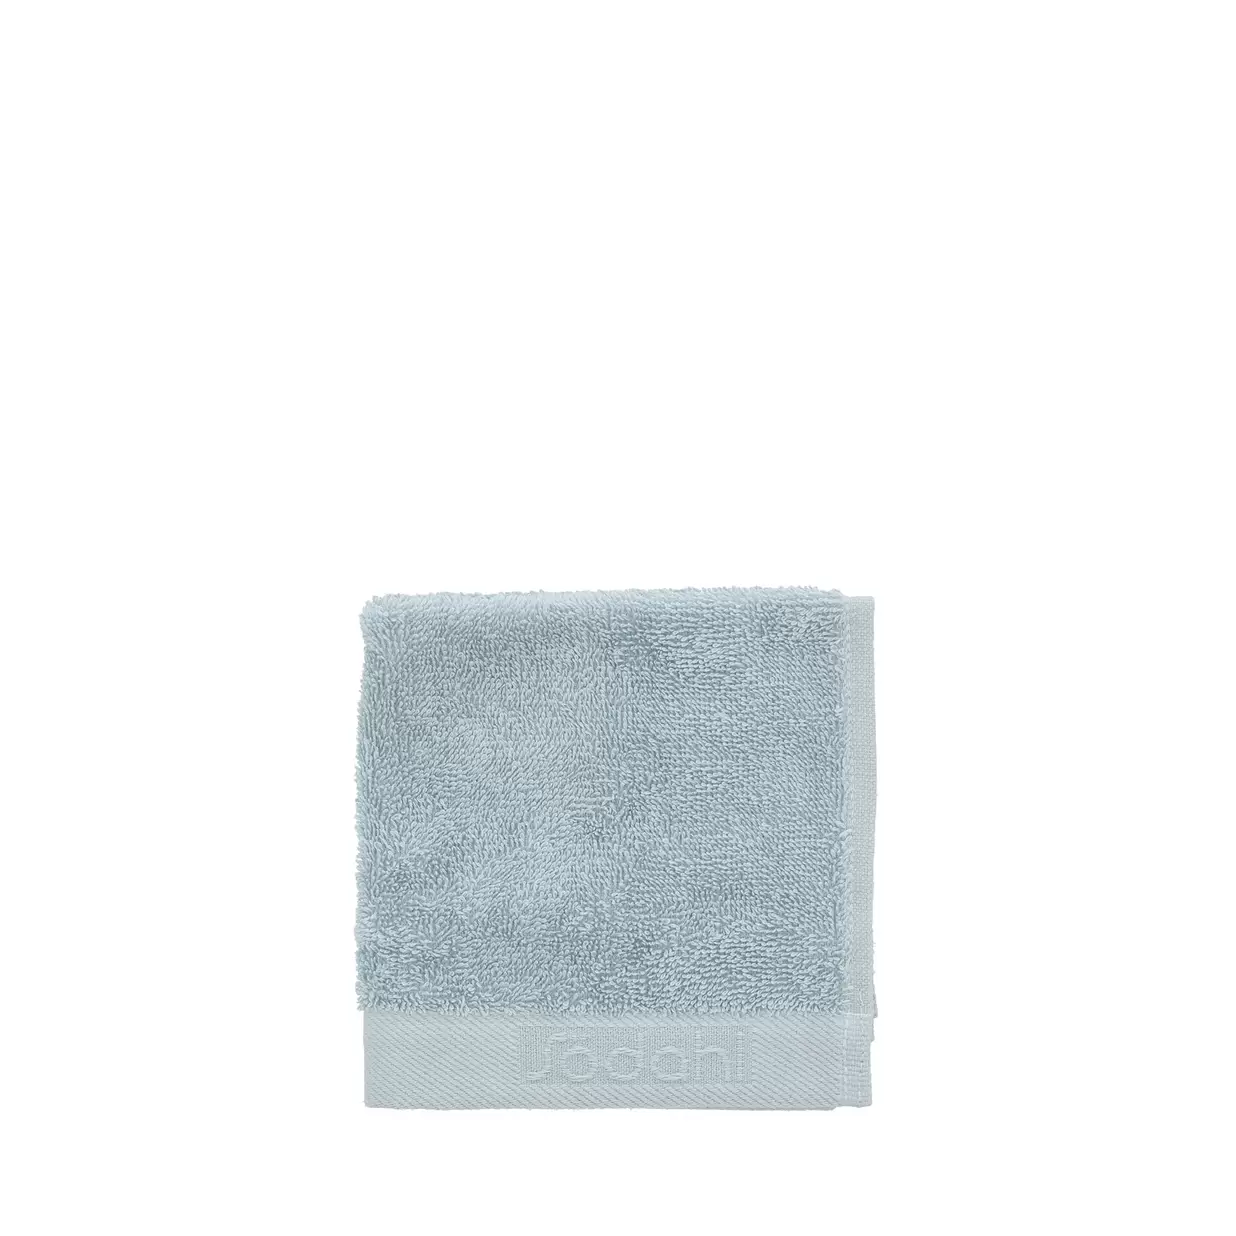 SÖDAHL Comfort vaskeklud 30x30 cm linen blue på tilbud til 29,95 kr. hos Sinnerup